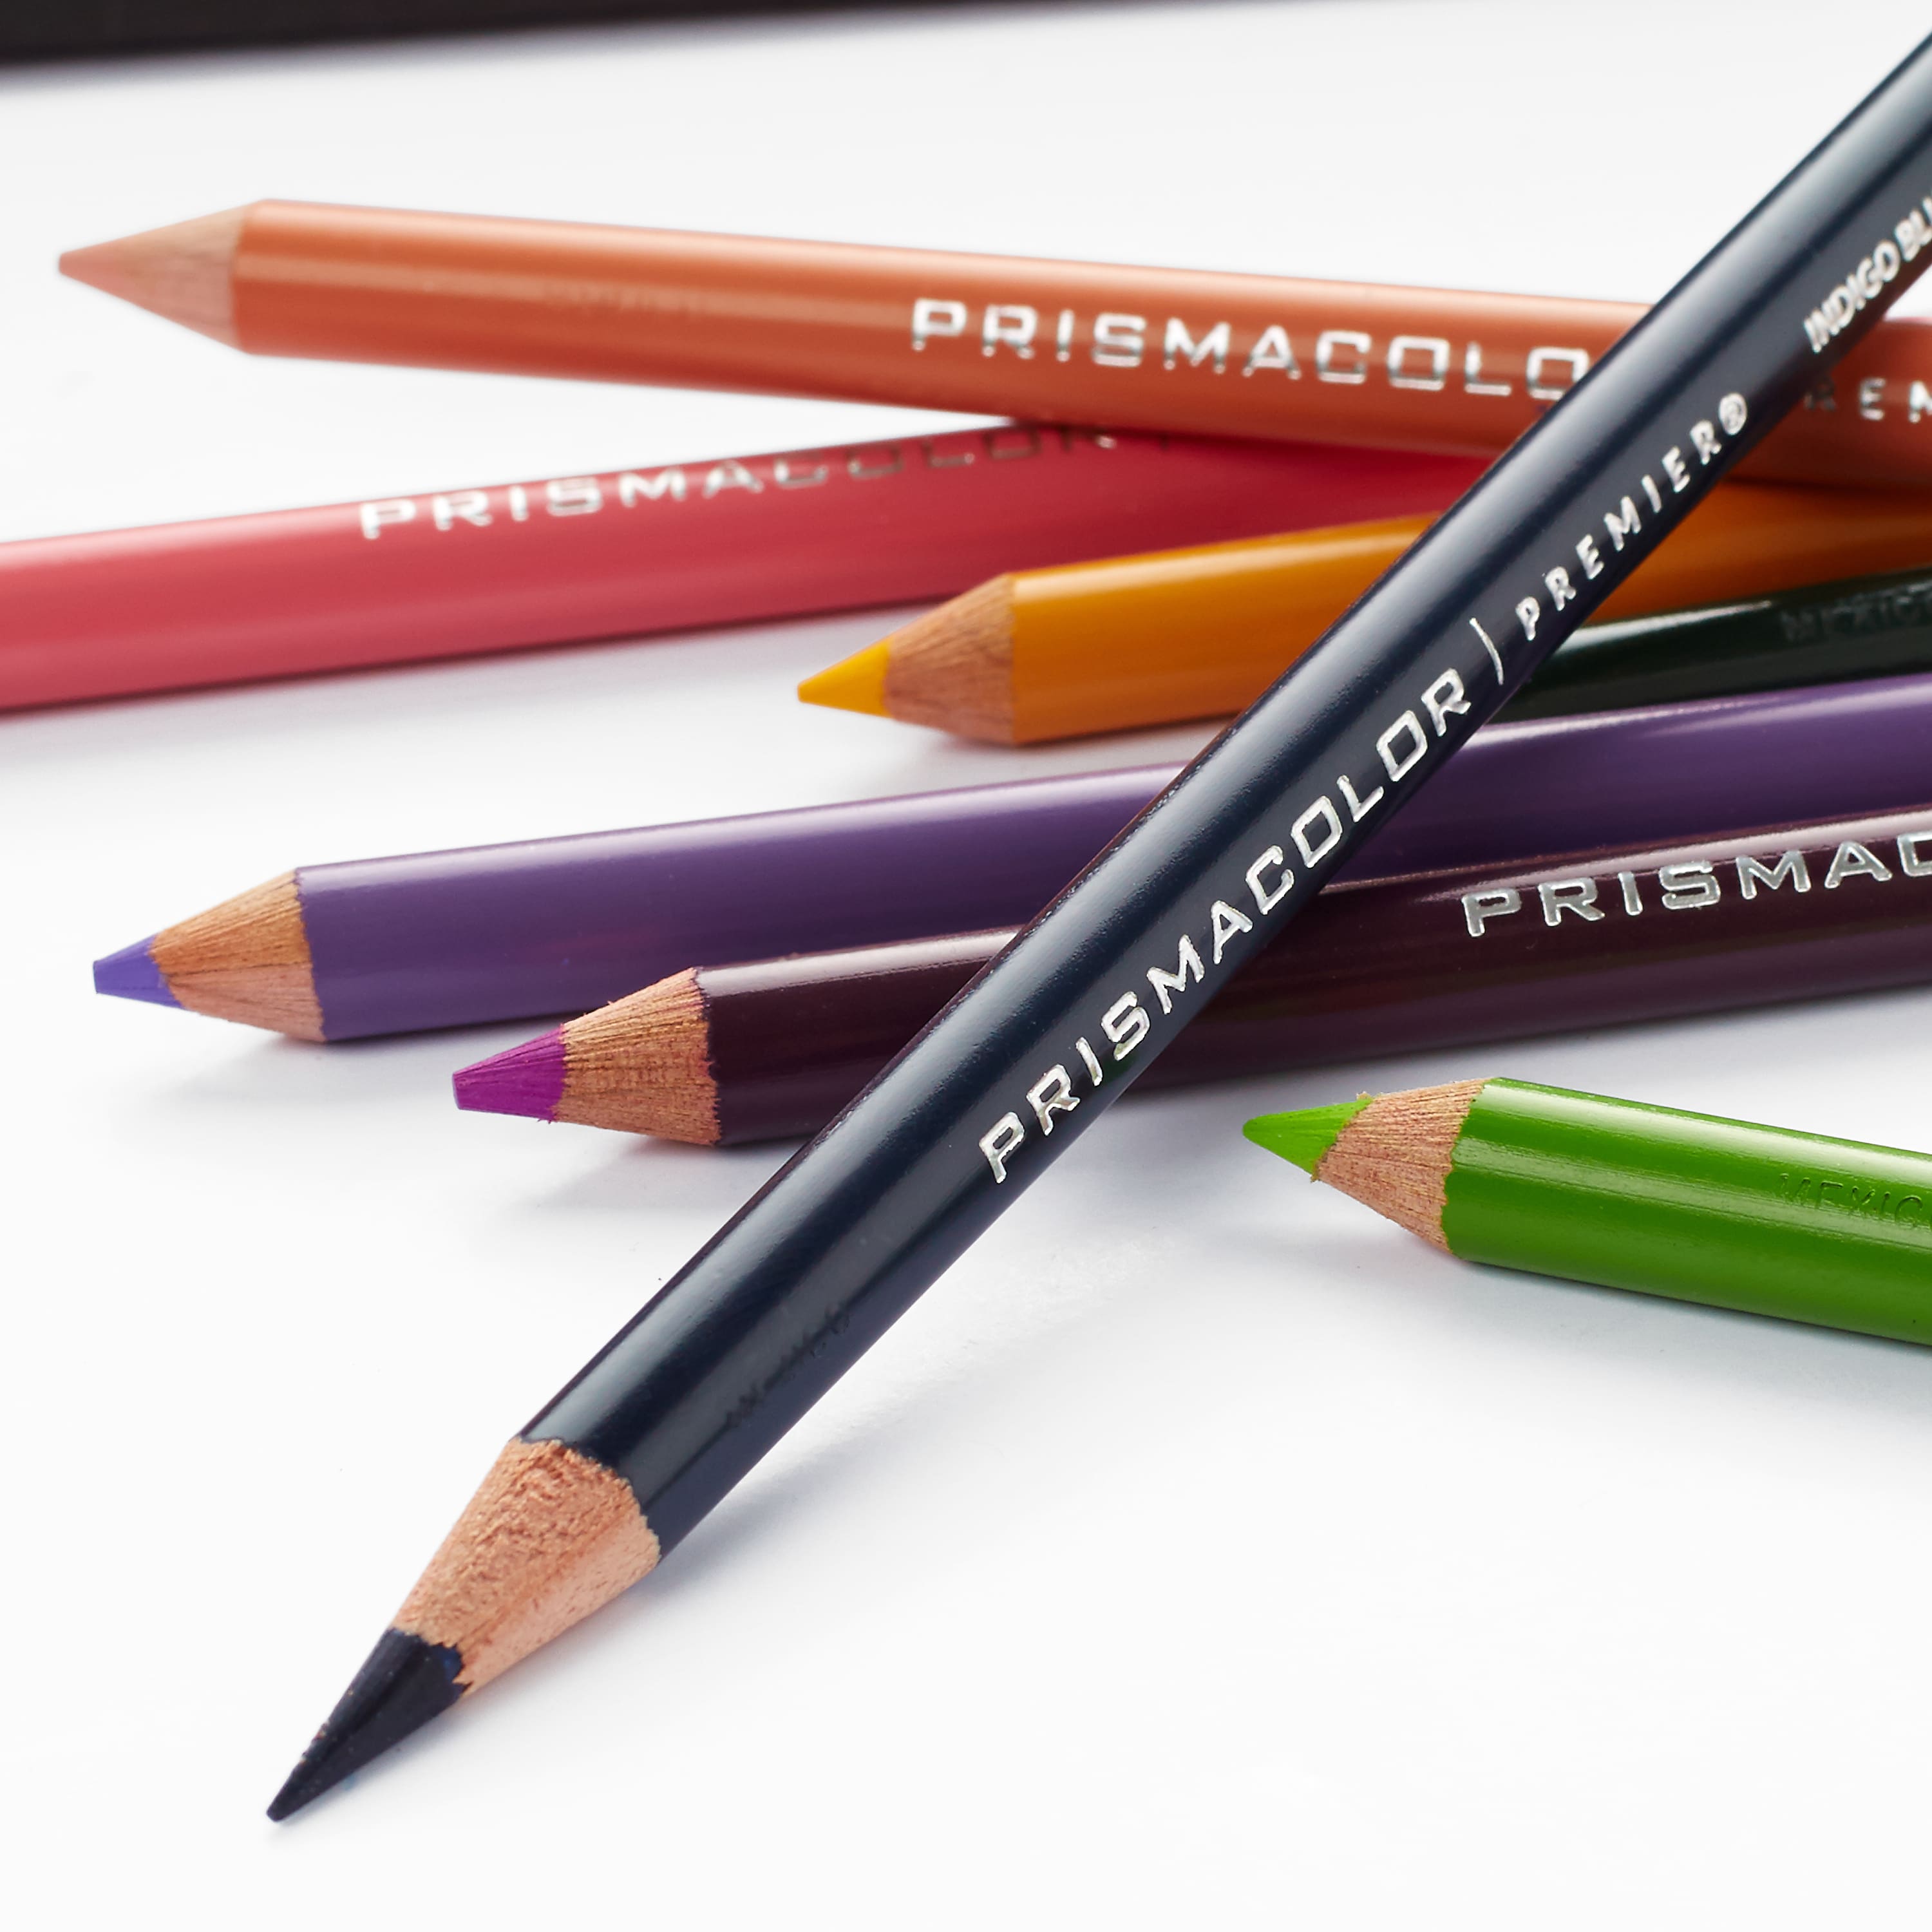 Prismacolor Highlighting & Shading Colored Pencil Set 24/Pkg